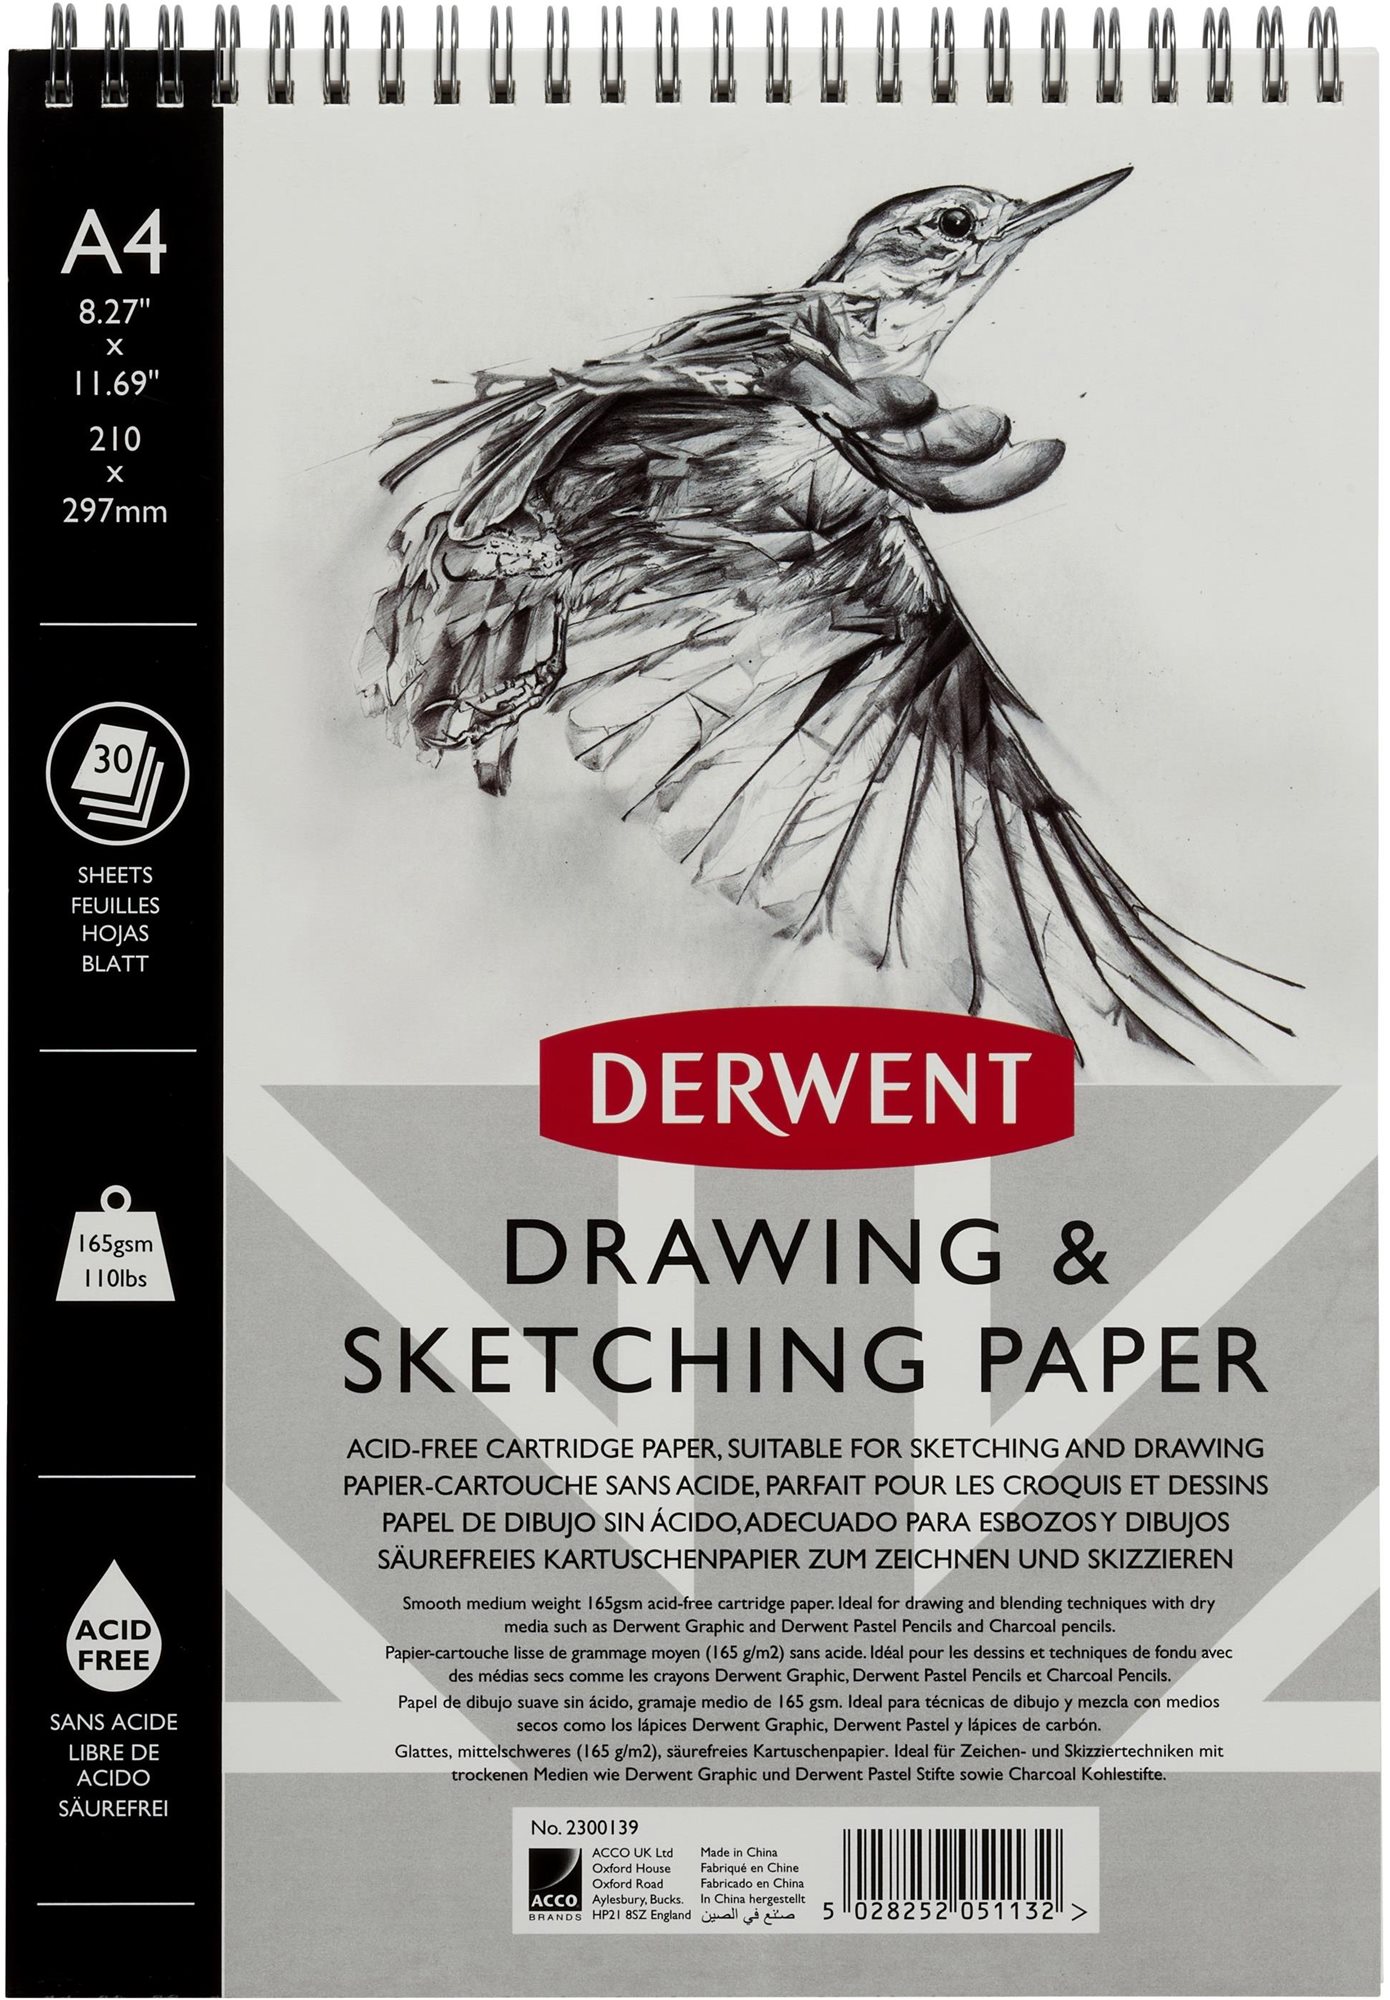 Vázlattömb DERWENT Drawing & Sketching Paper A4 / 30 lap / 165g/m2